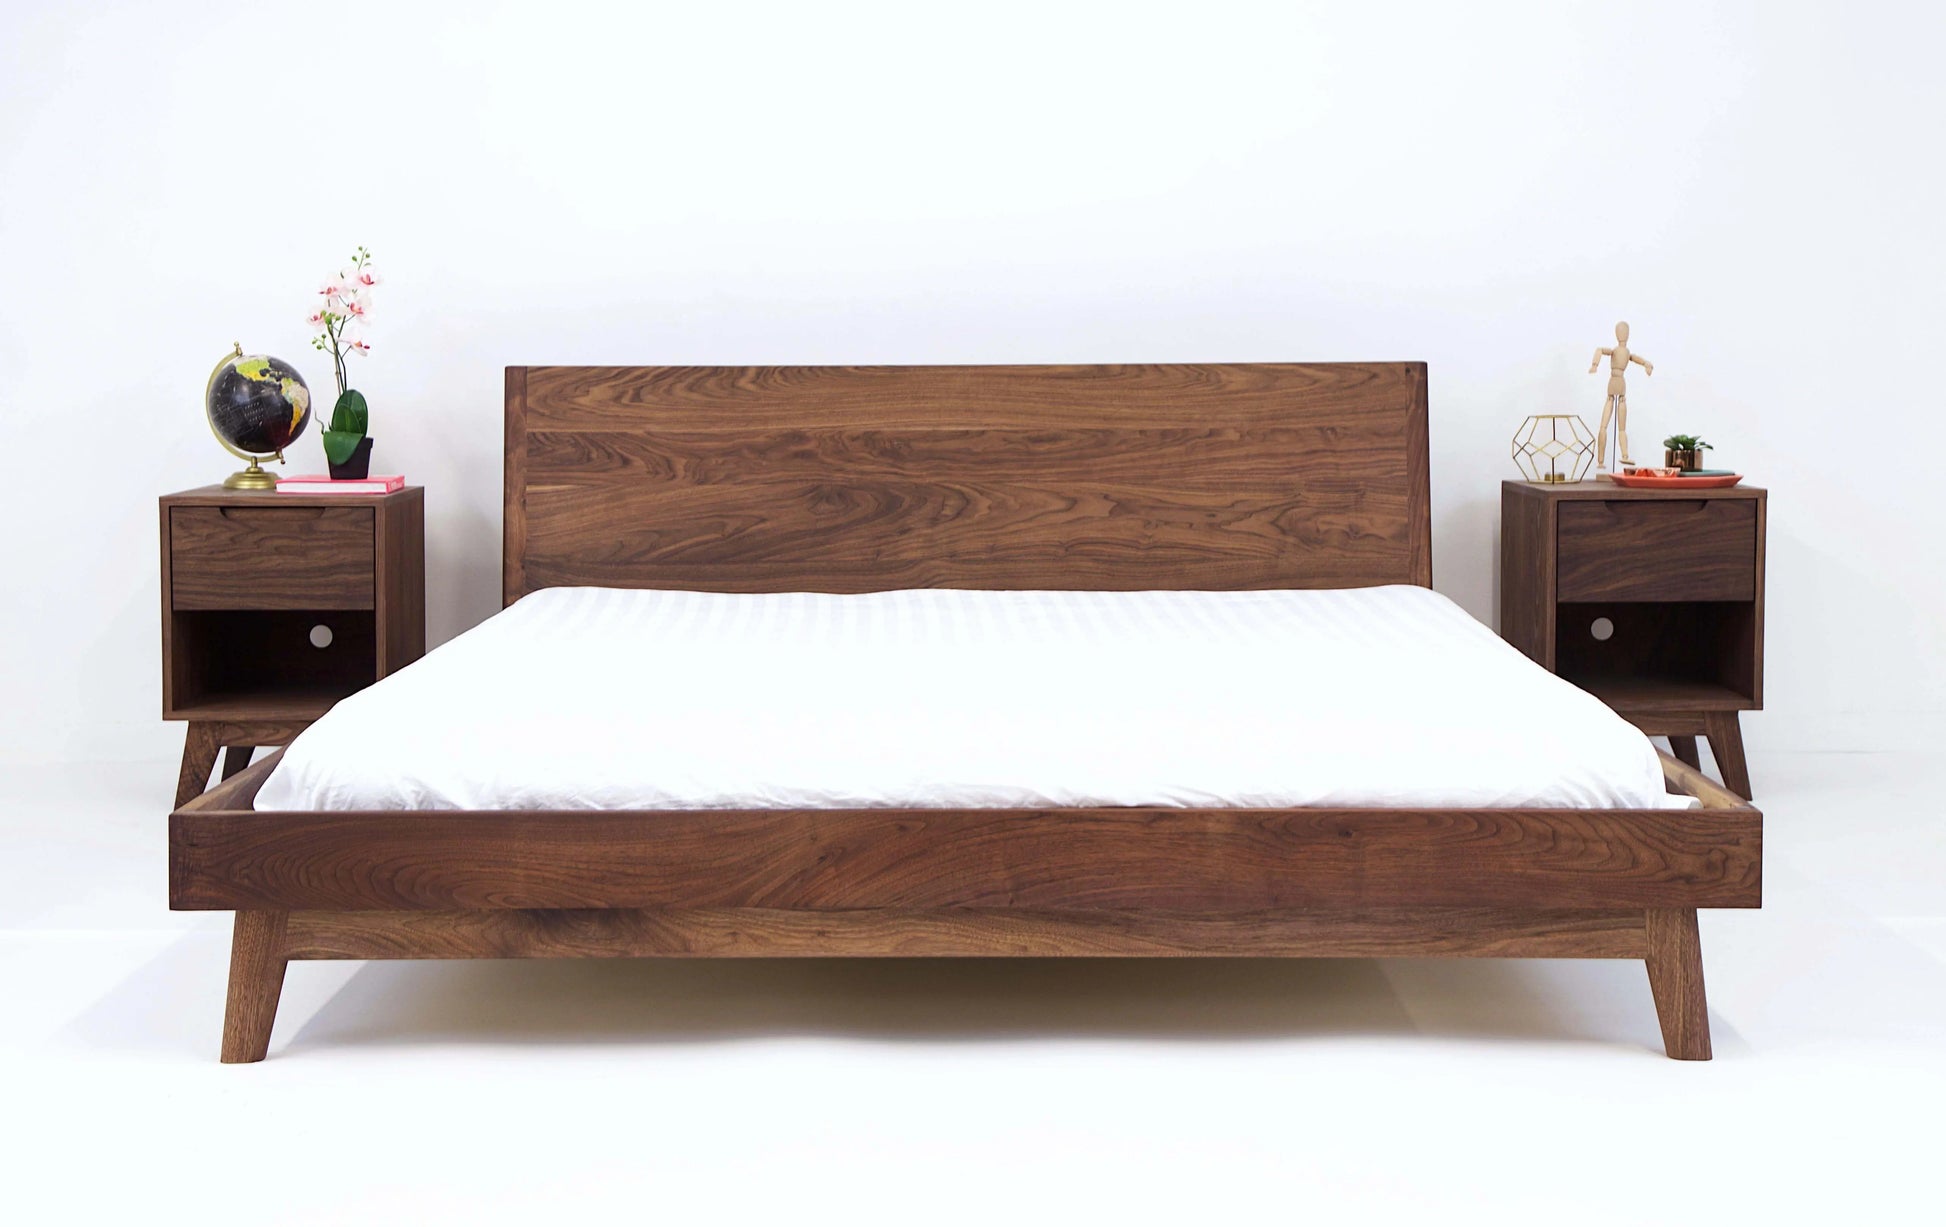 Walnut Dream: The Bosco Mid Century Modern Handcrafted Bed